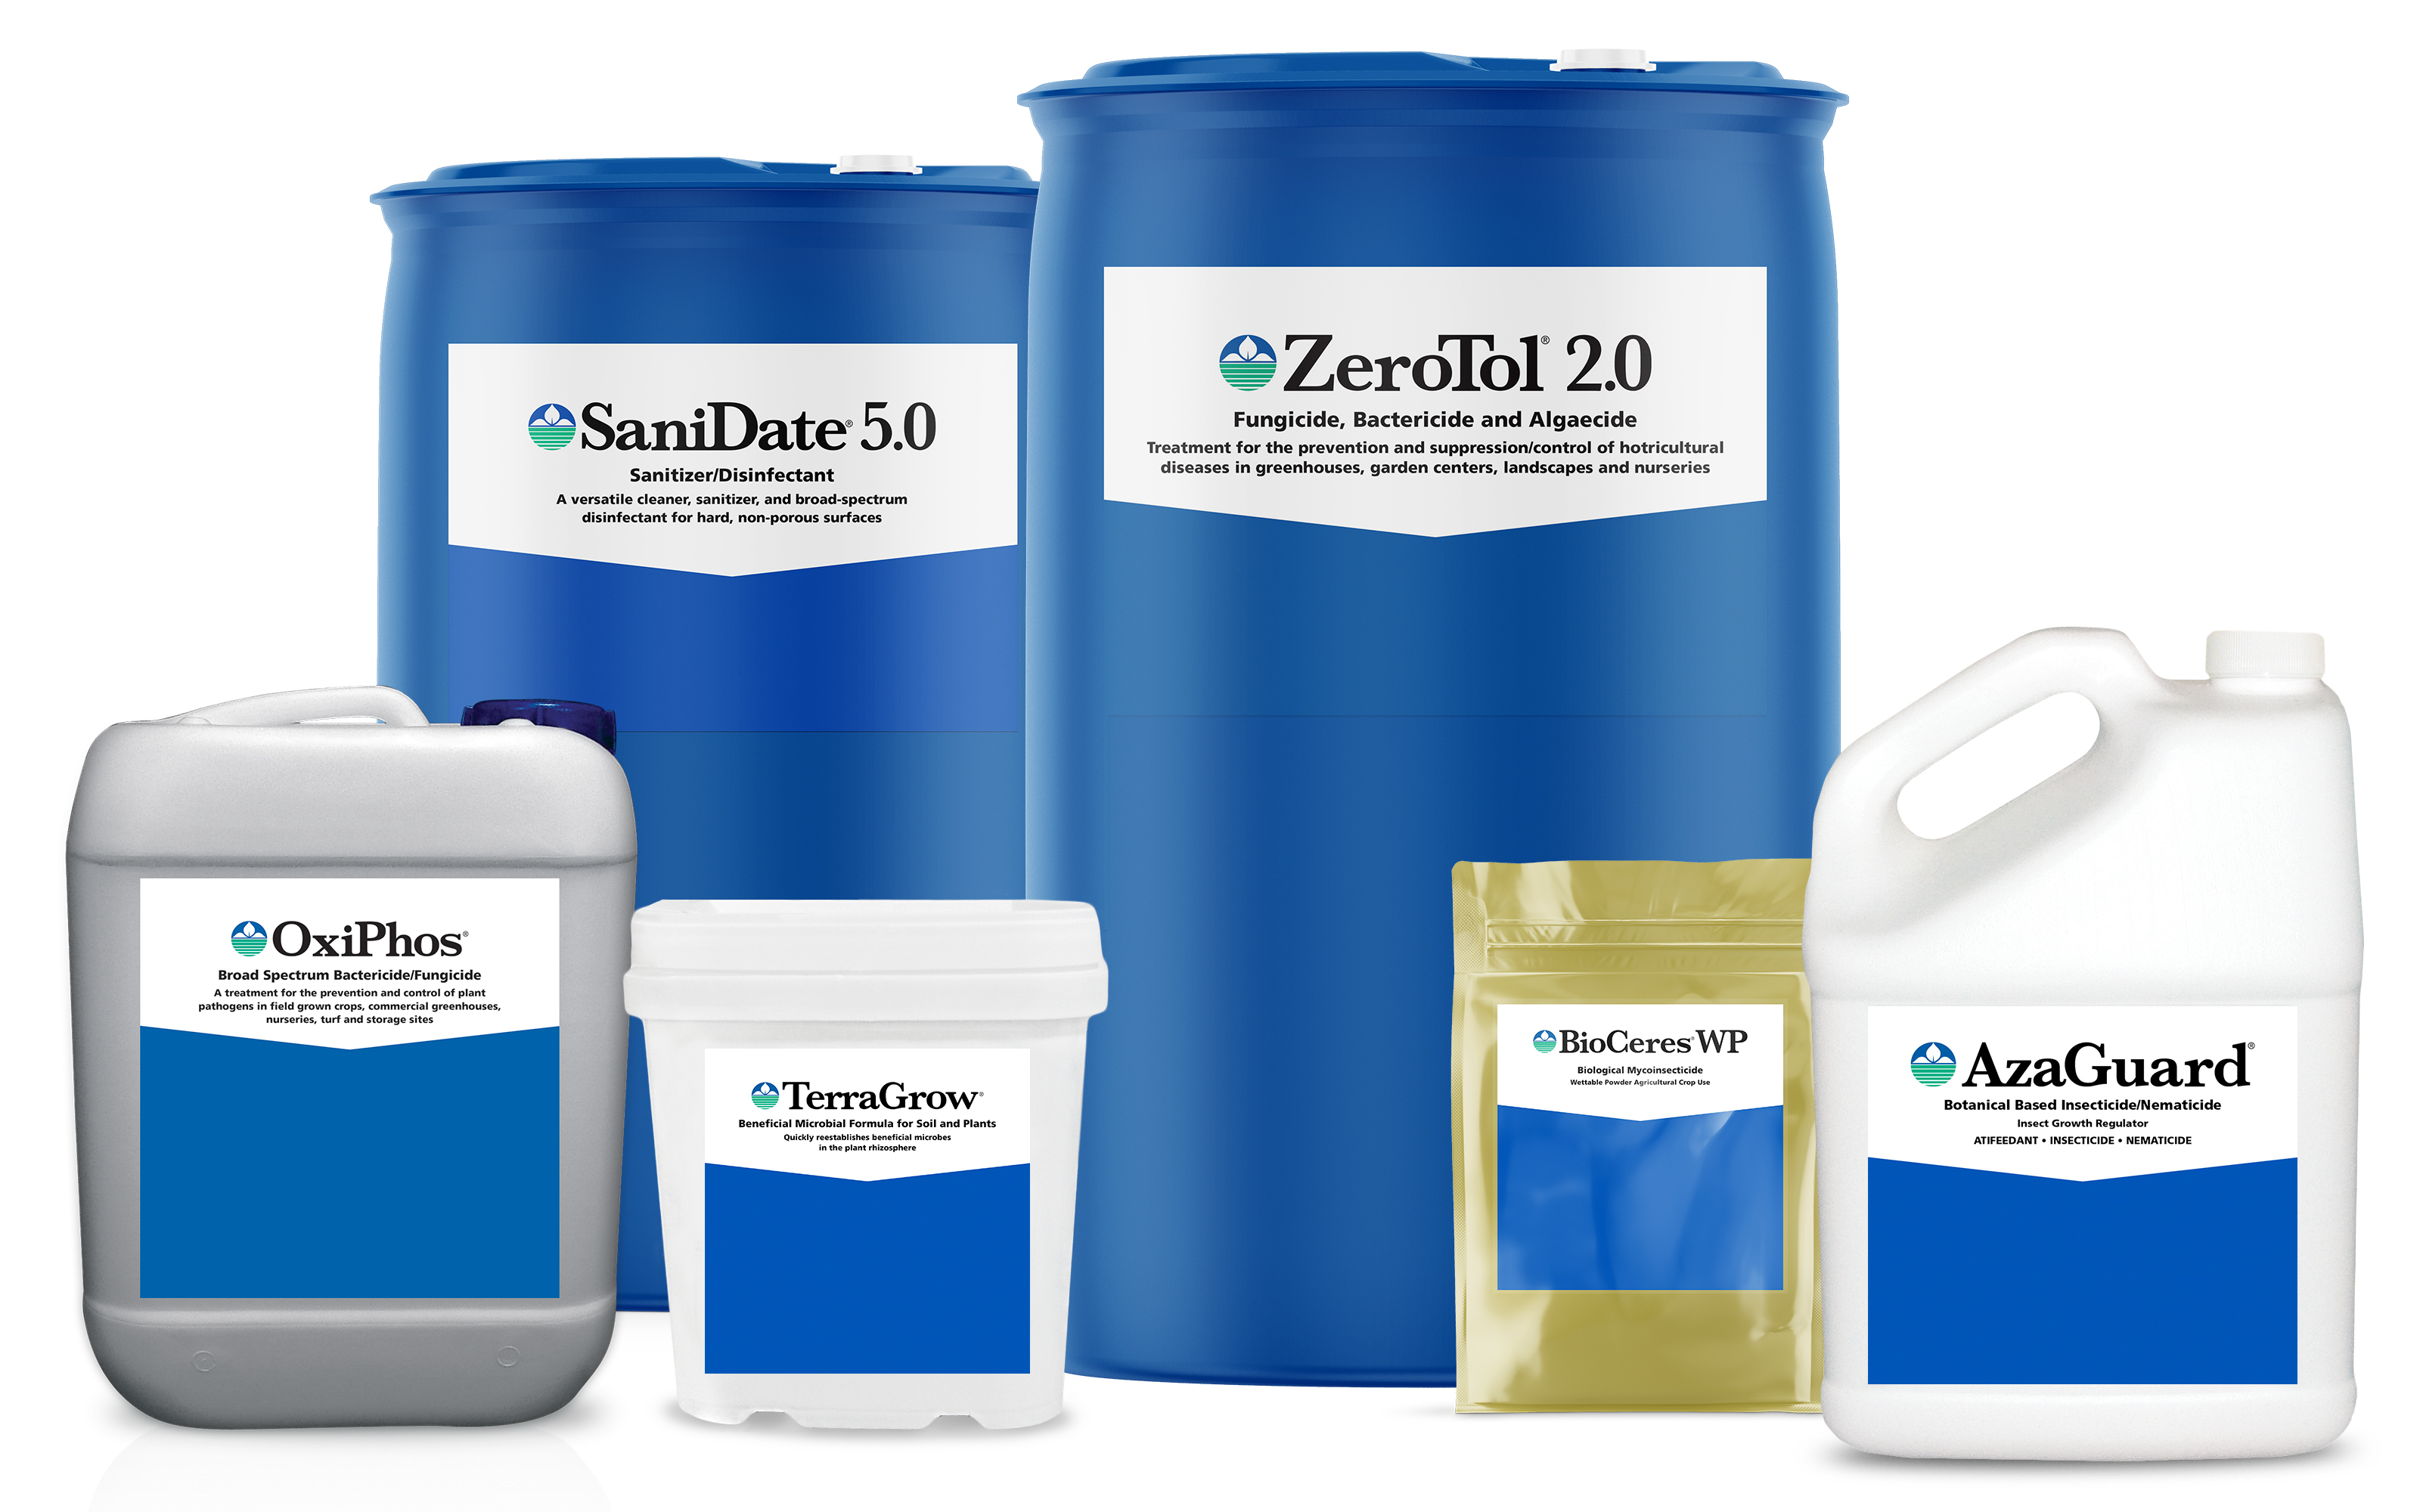 Product shot of SaniDate 5.0, ZeroTol 2.0, OxiPhos, TerraGrow, BioCeres WP and AzaGuard